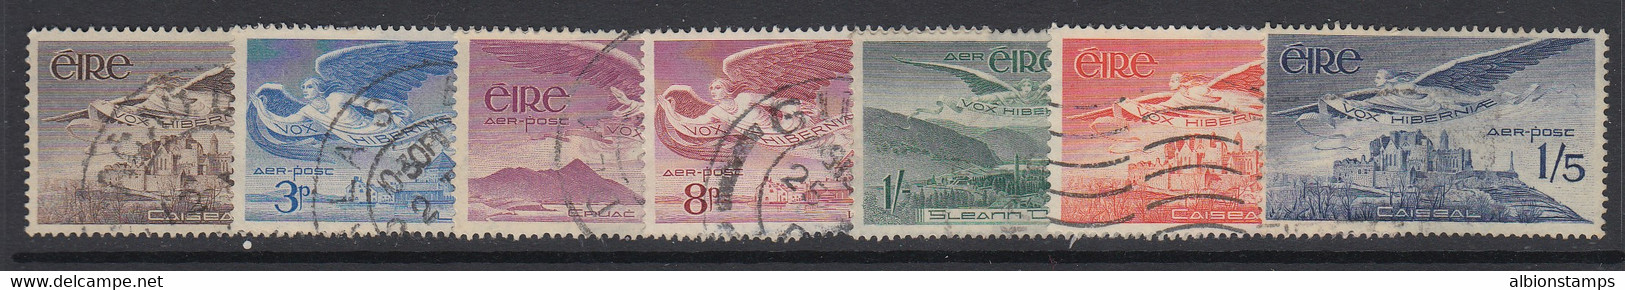 Ireland, Scott C1-C6 (SG 140-143b), Used - Airmail